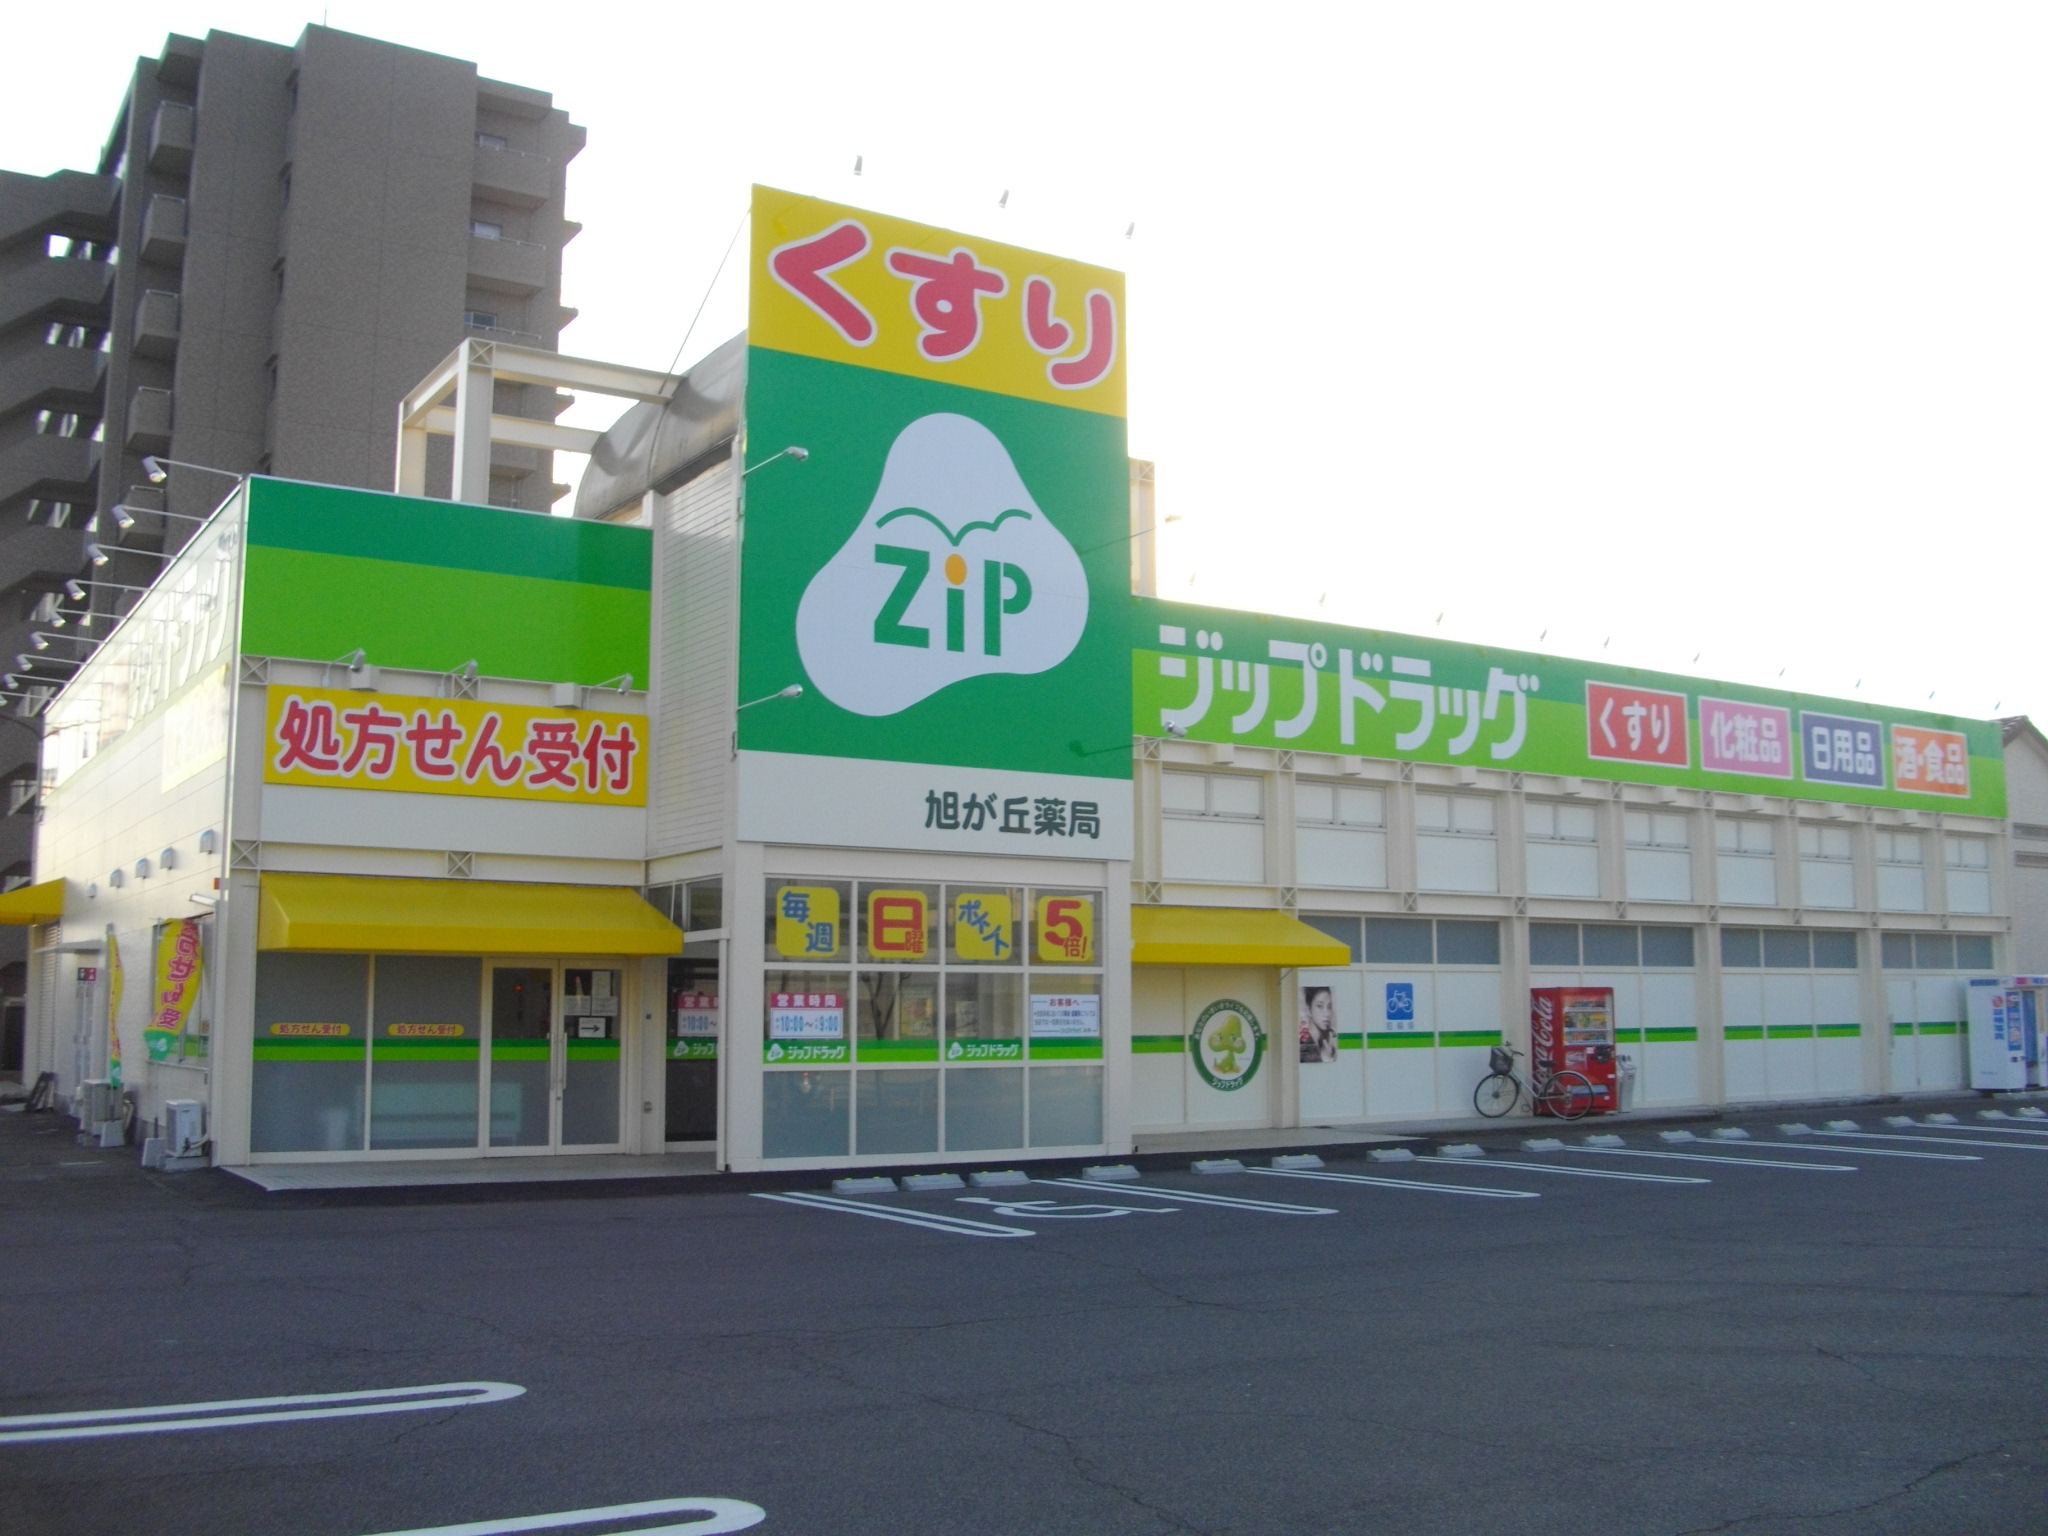 Dorakkusutoa. 414m to zip drag Asahigaoka pharmacy (drugstore)